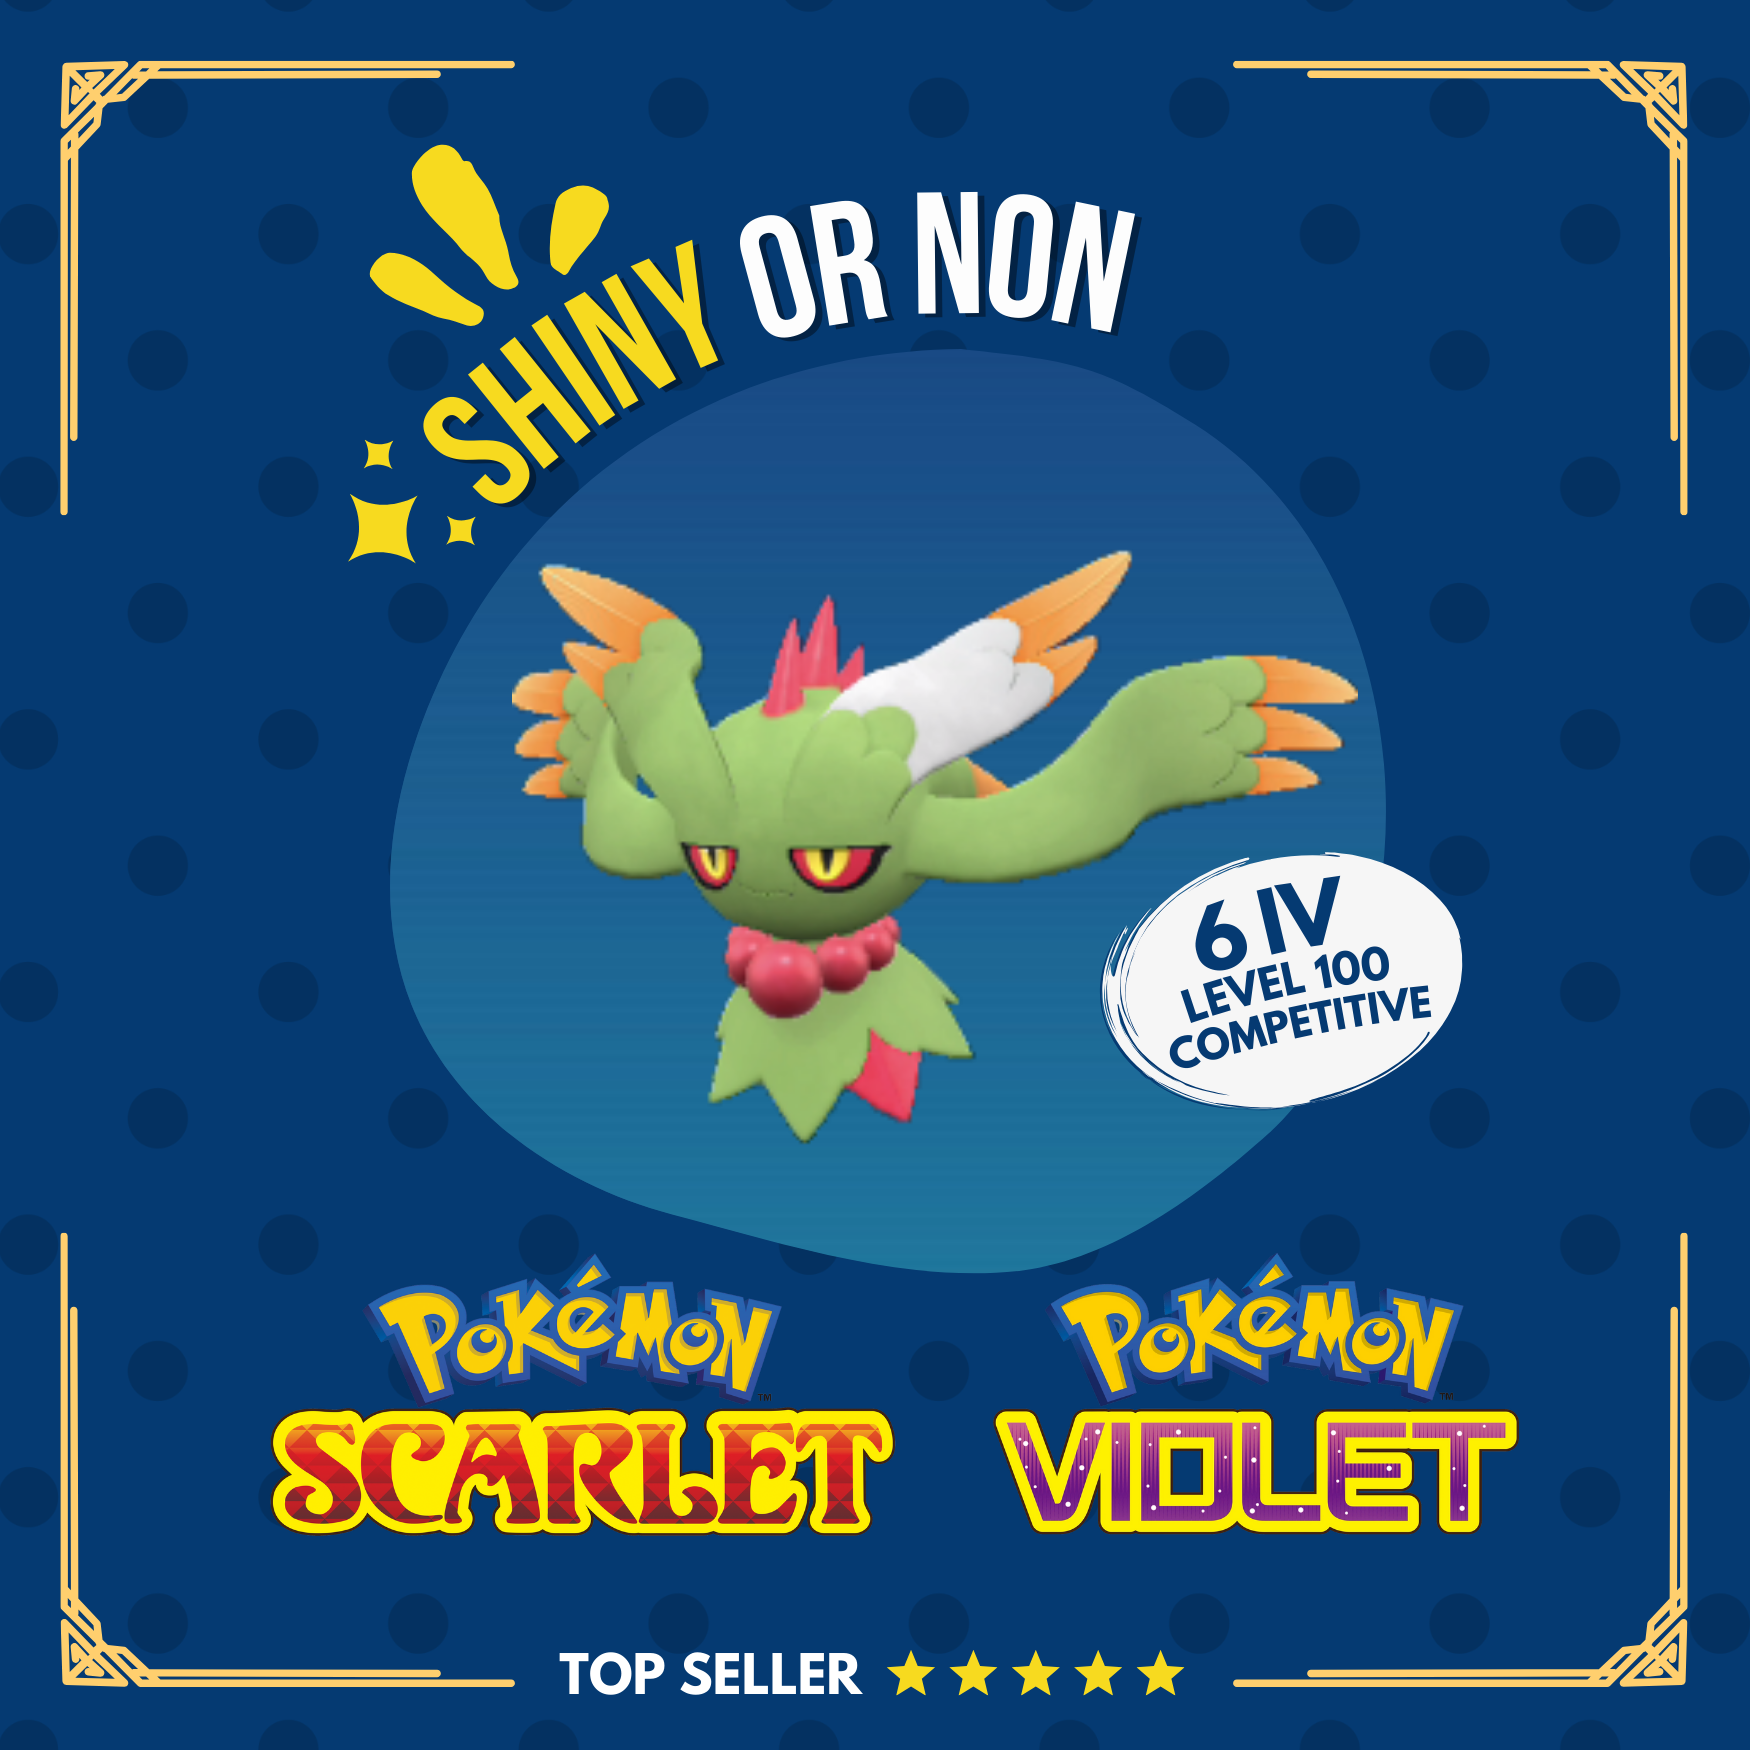 Flutter Mane Misdreavus Paradox Shiny o Non ✨ Competitive Pokémon Scarlet Violet by Shiny Living Dex | Shiny Living Dex